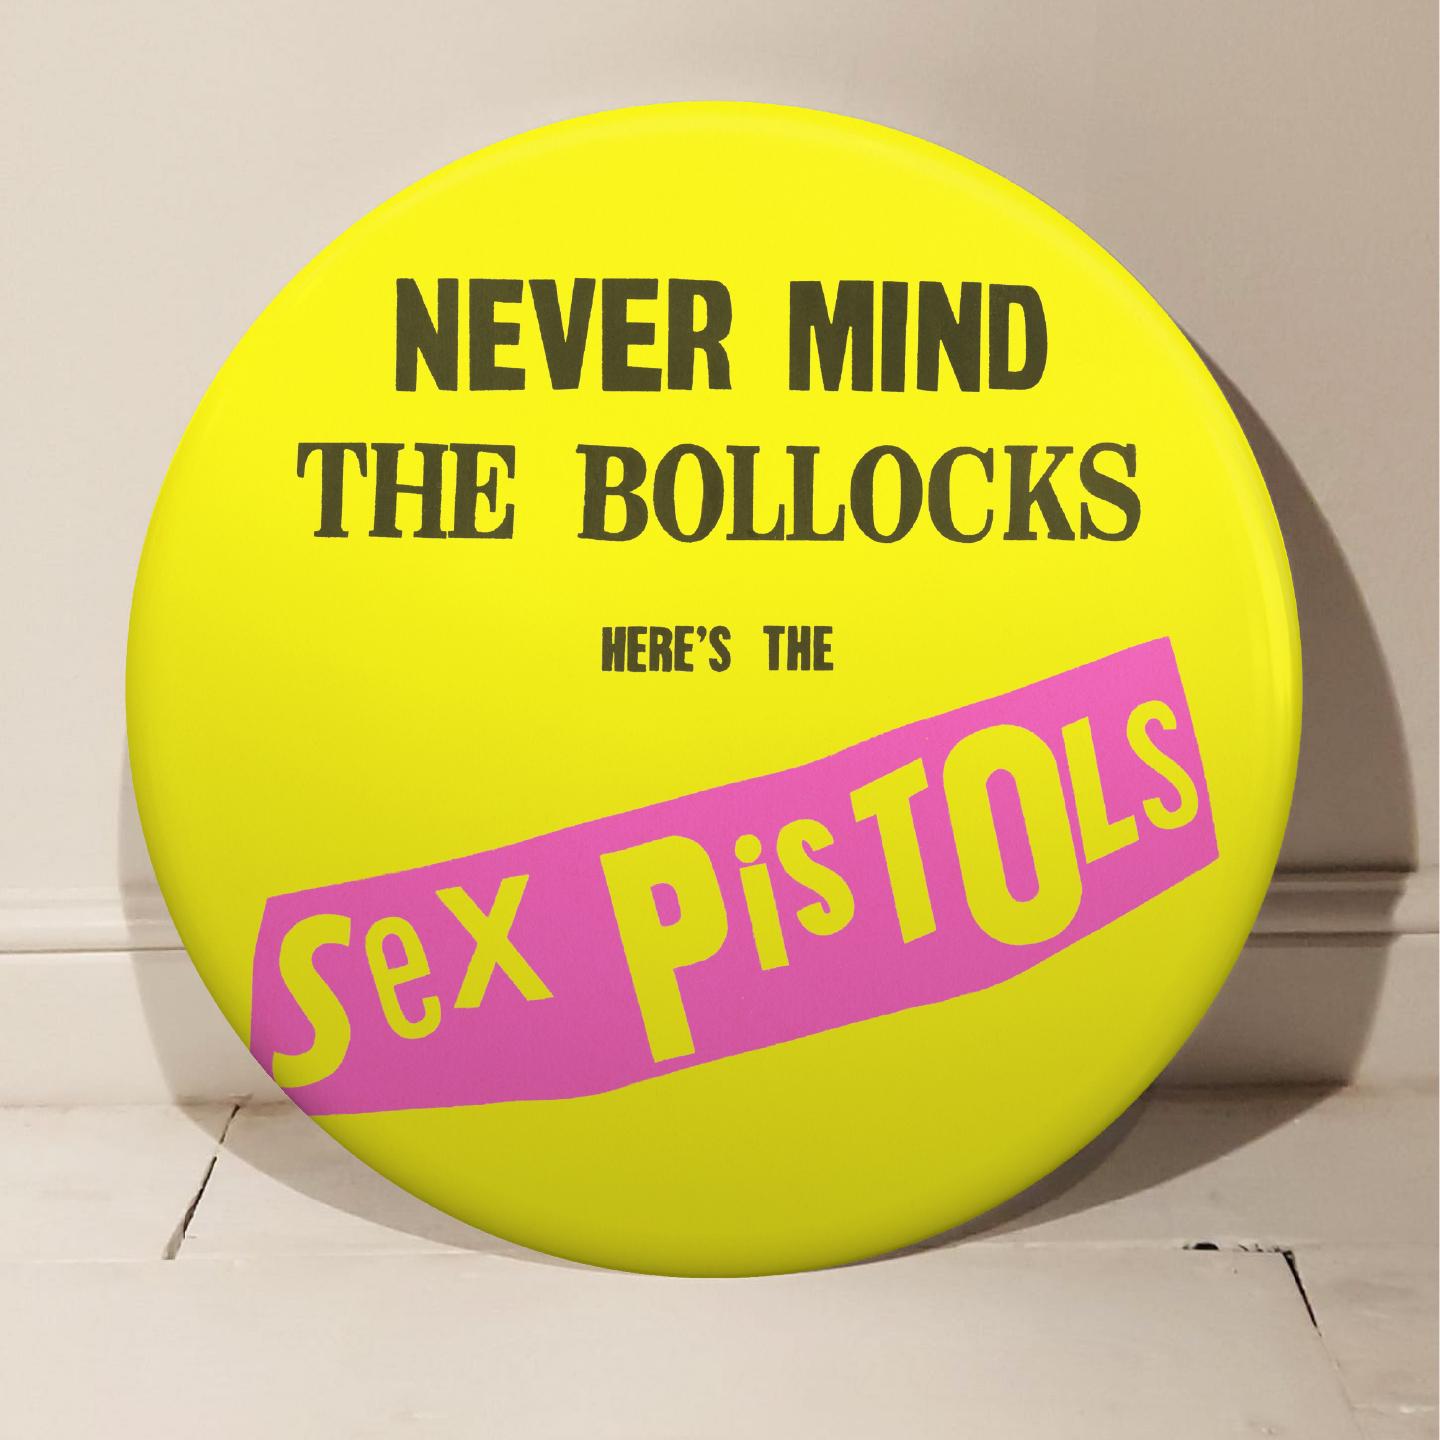 Sex Pistols "Never Mind The Bollocks" Giant Handmade 3D Vintage Button - Art by Tony Dennis